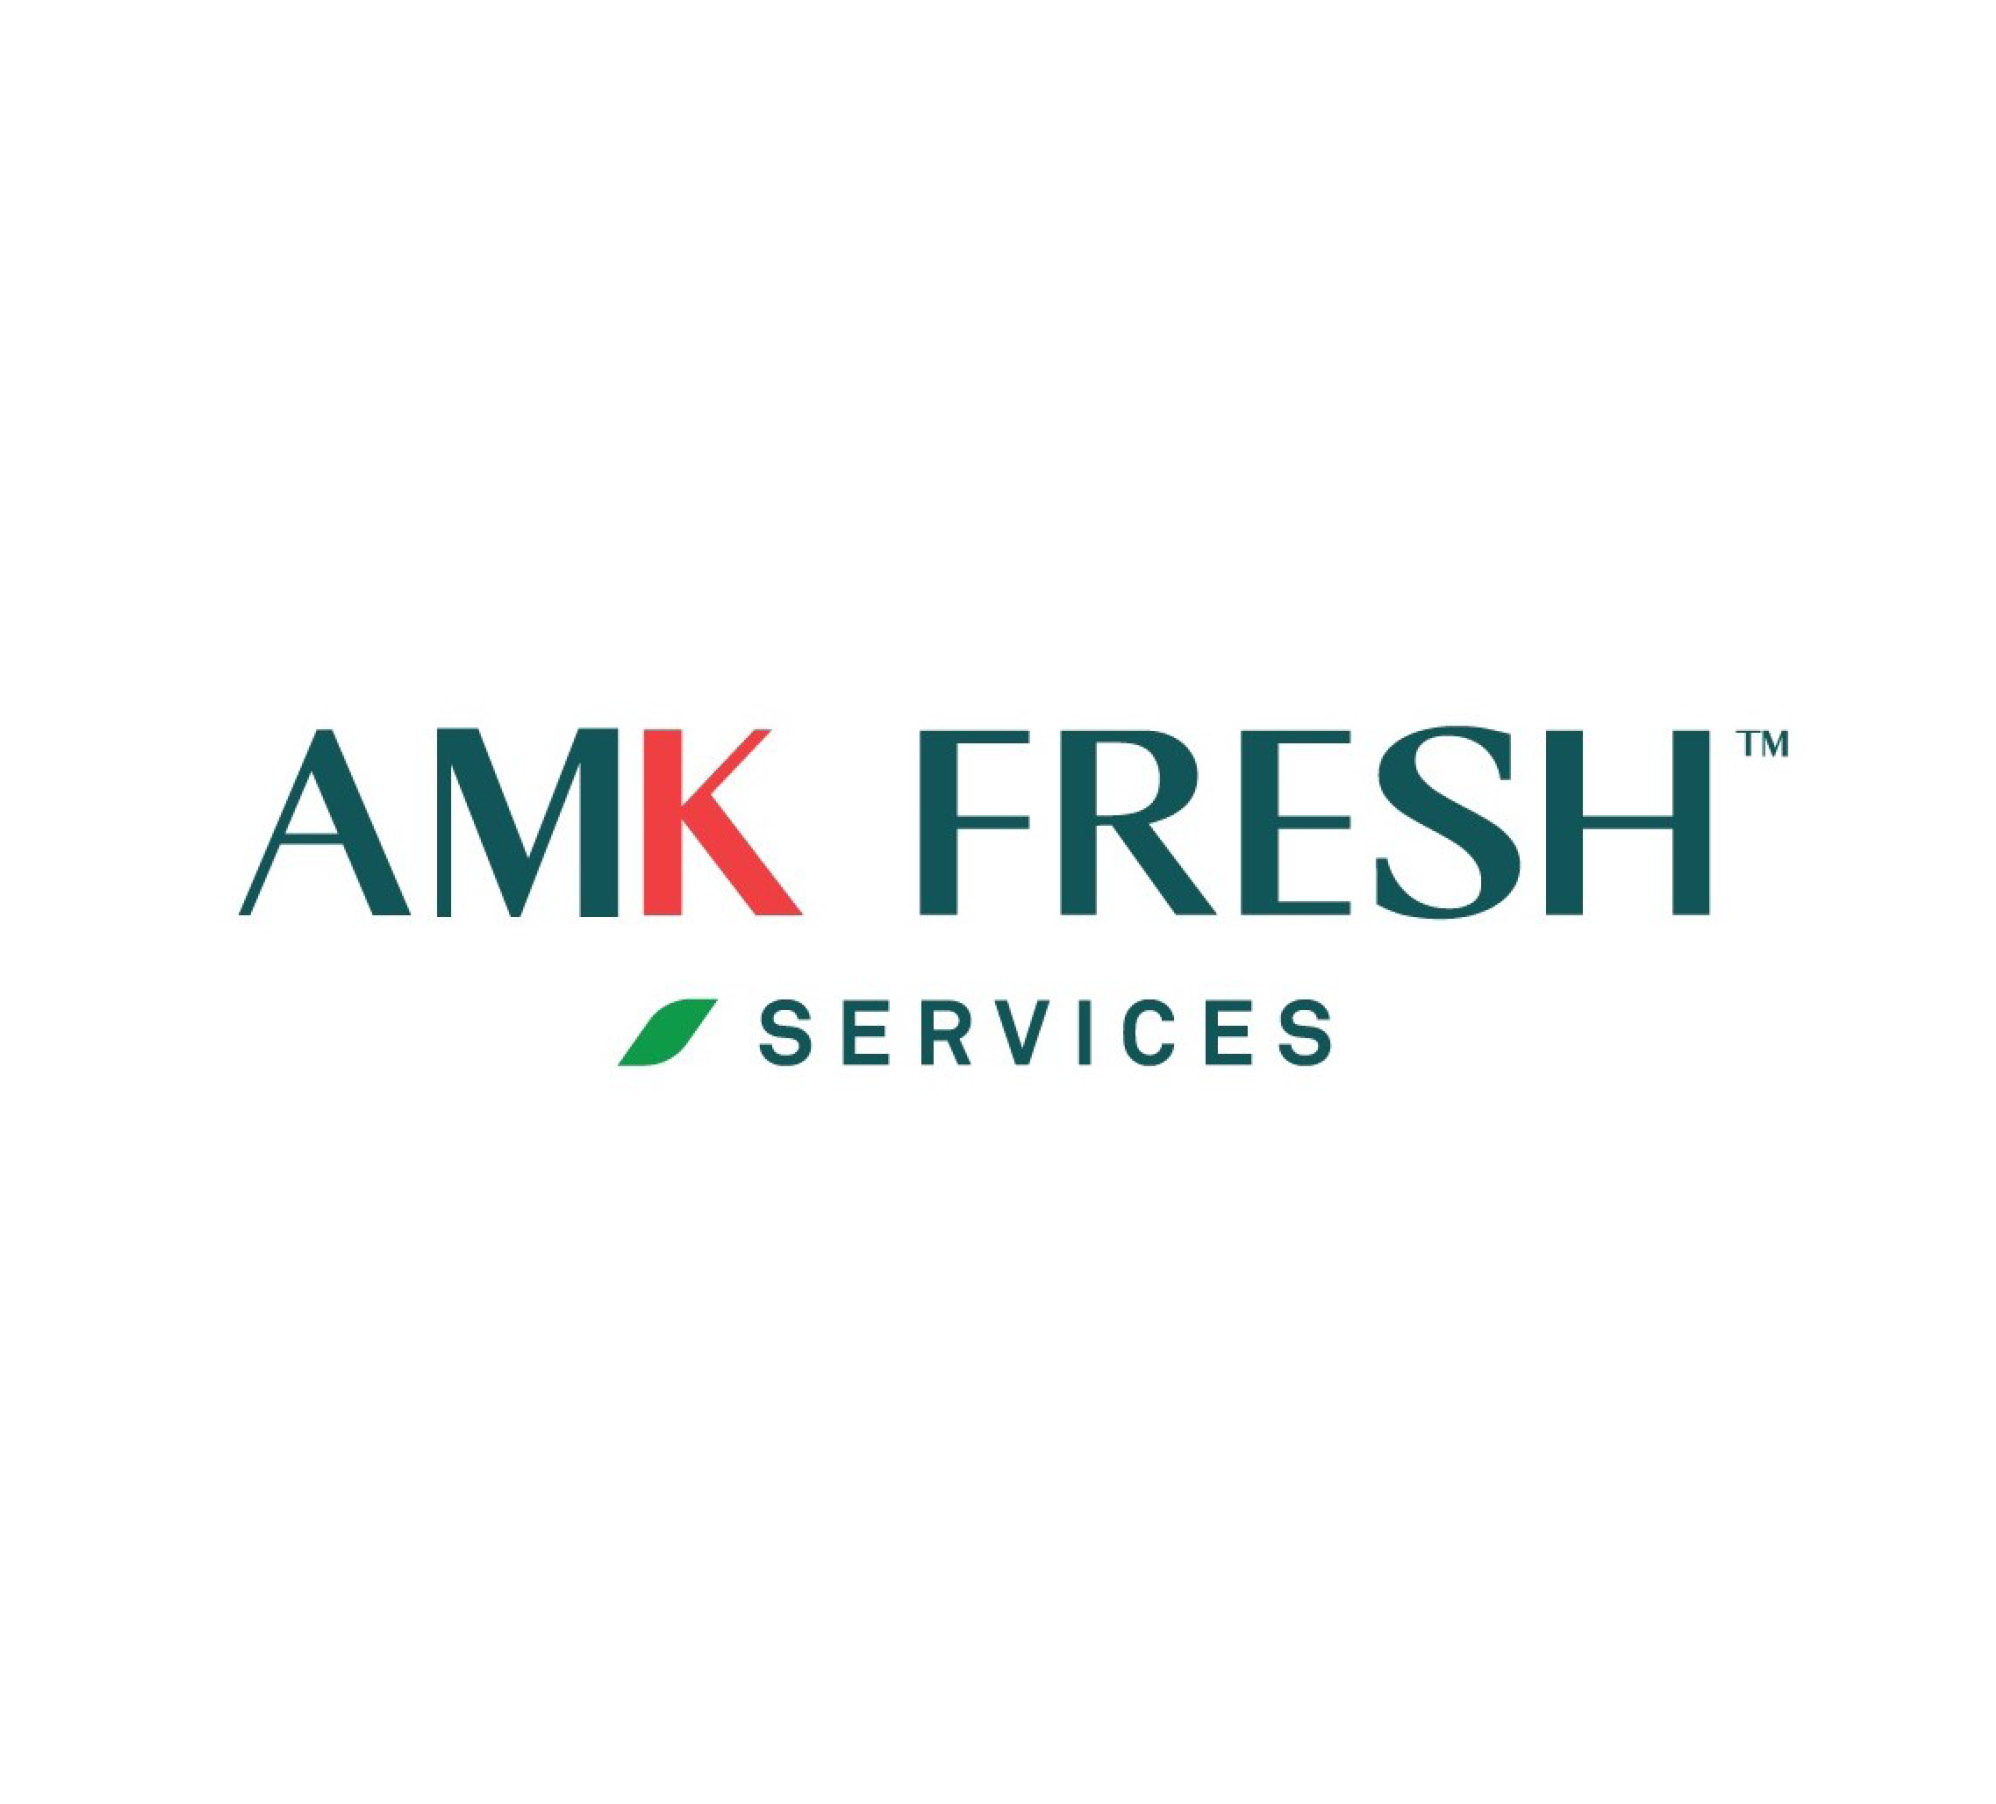 AMK Fruit Services